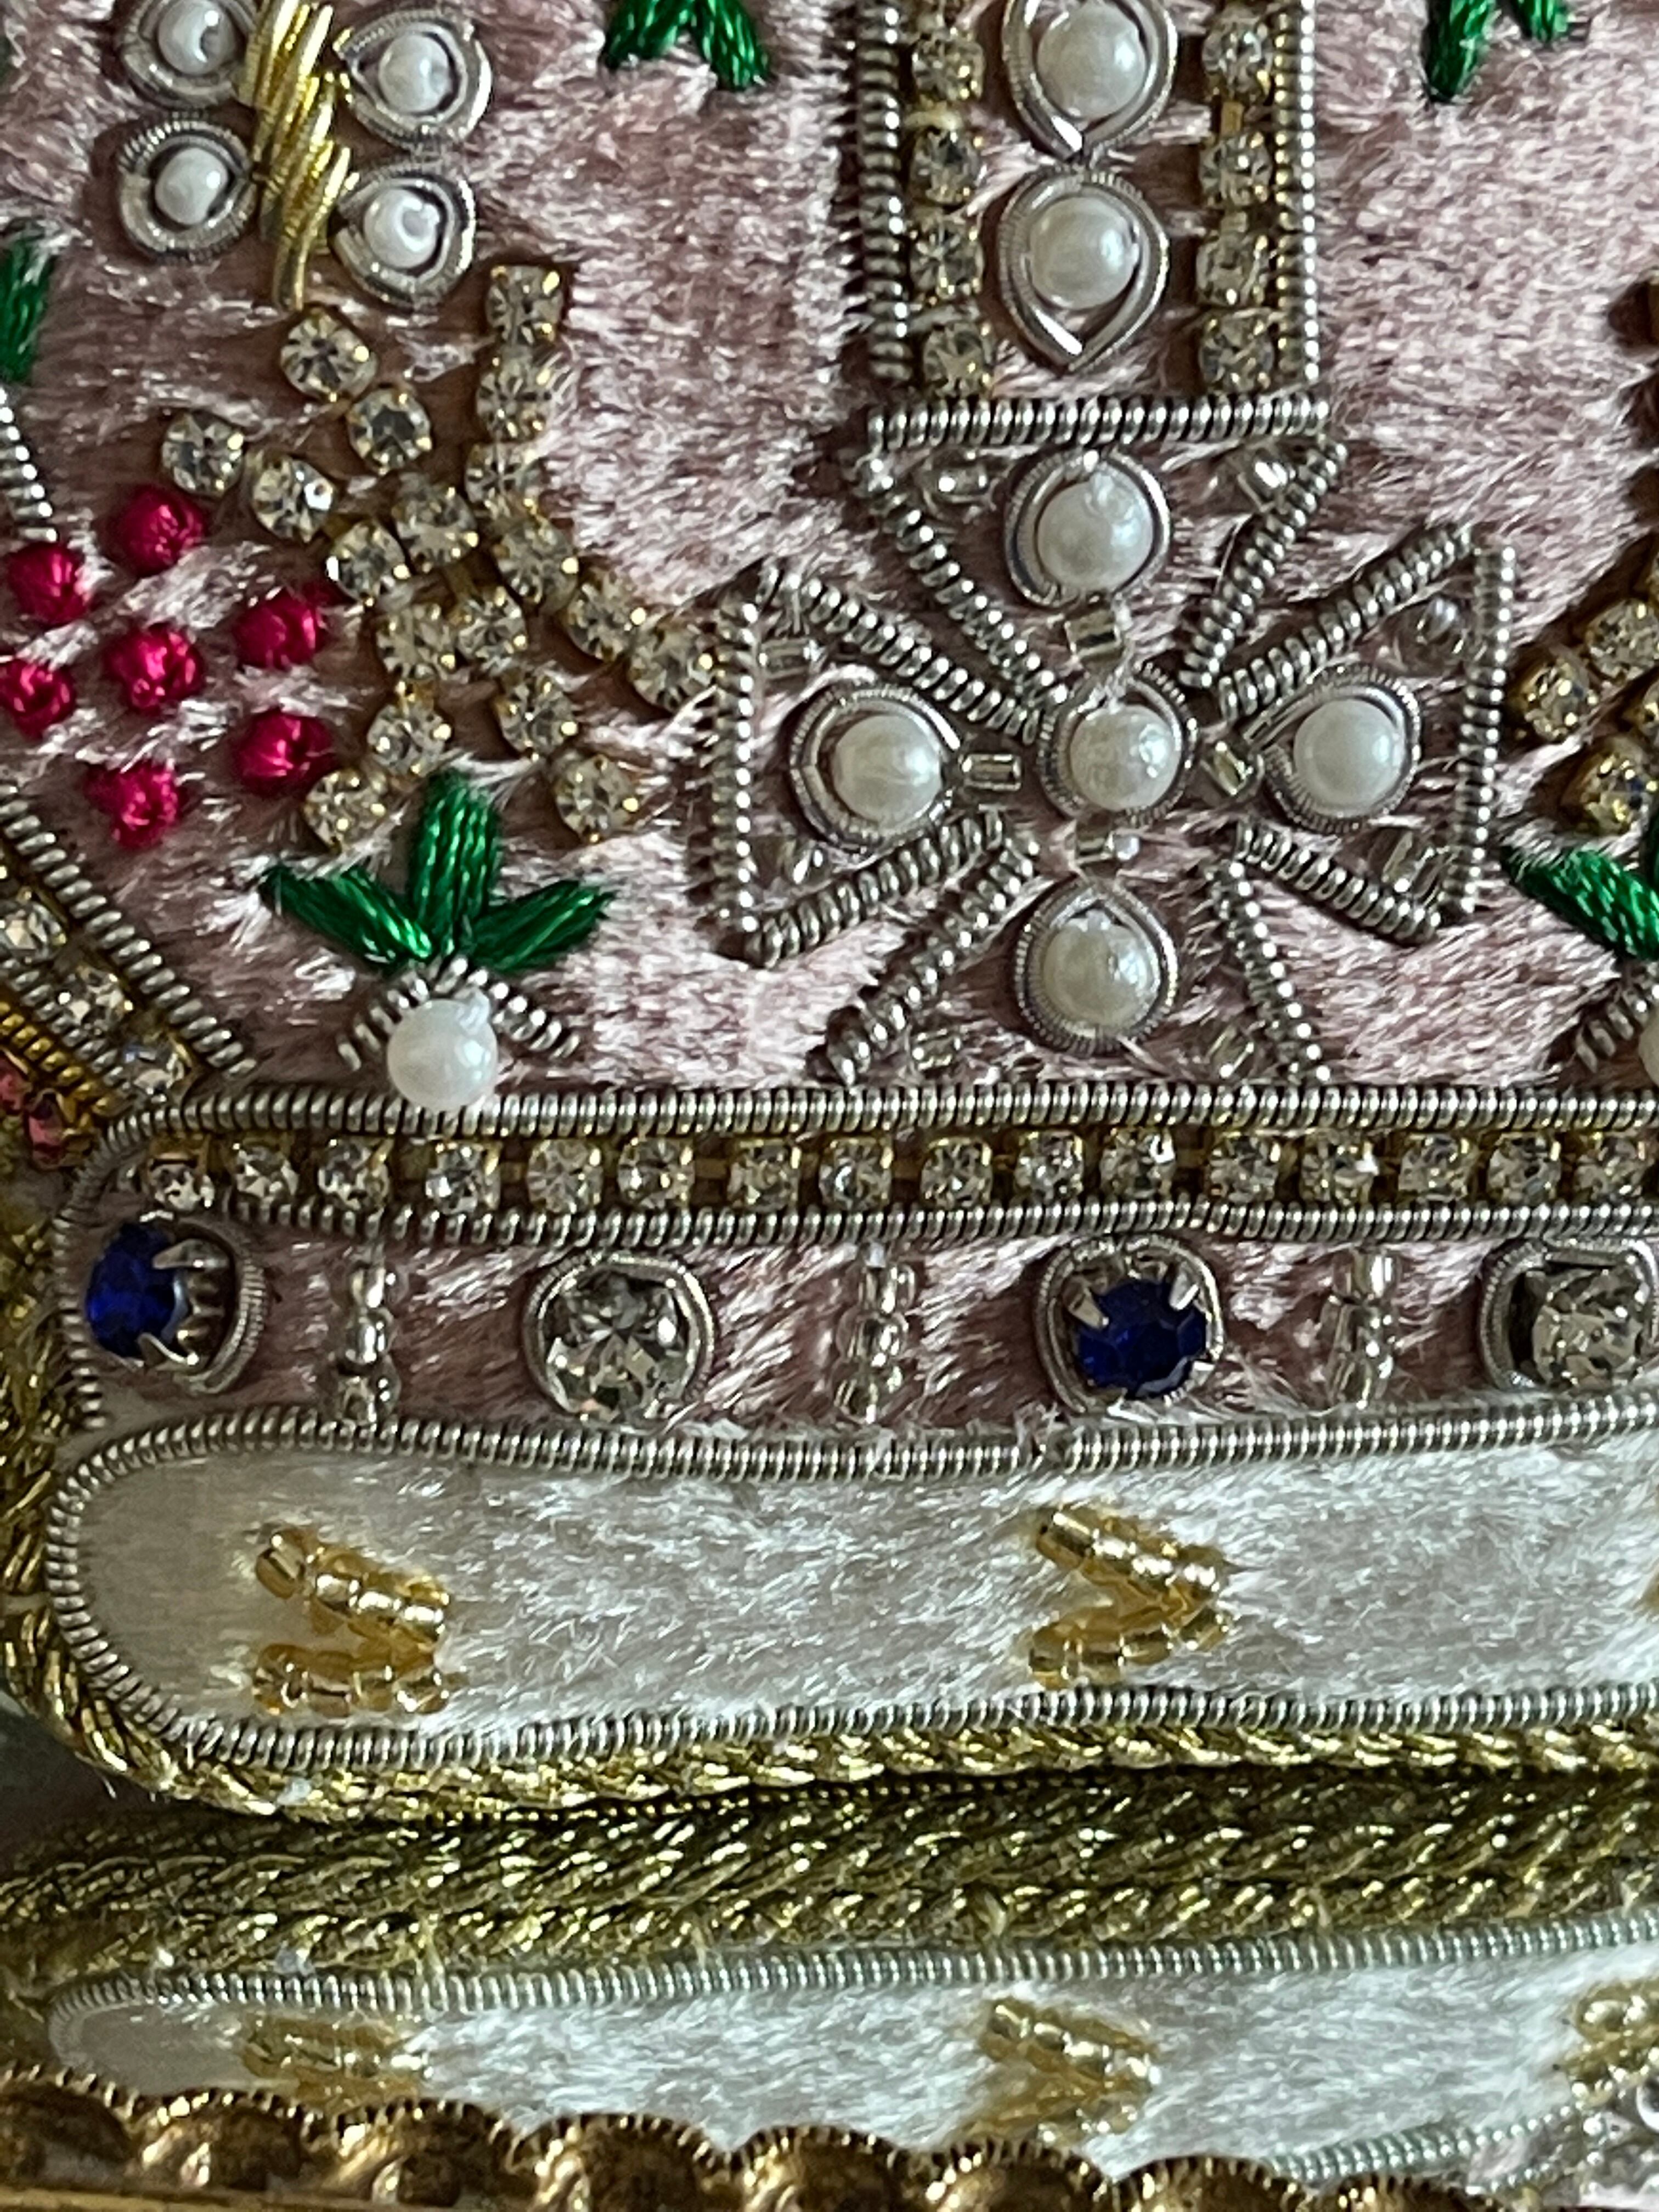 『Royal Palace』豪華な花のビーズの王冠 オーナメント ロイヤルパレス Floral Beaded Crown Decoration